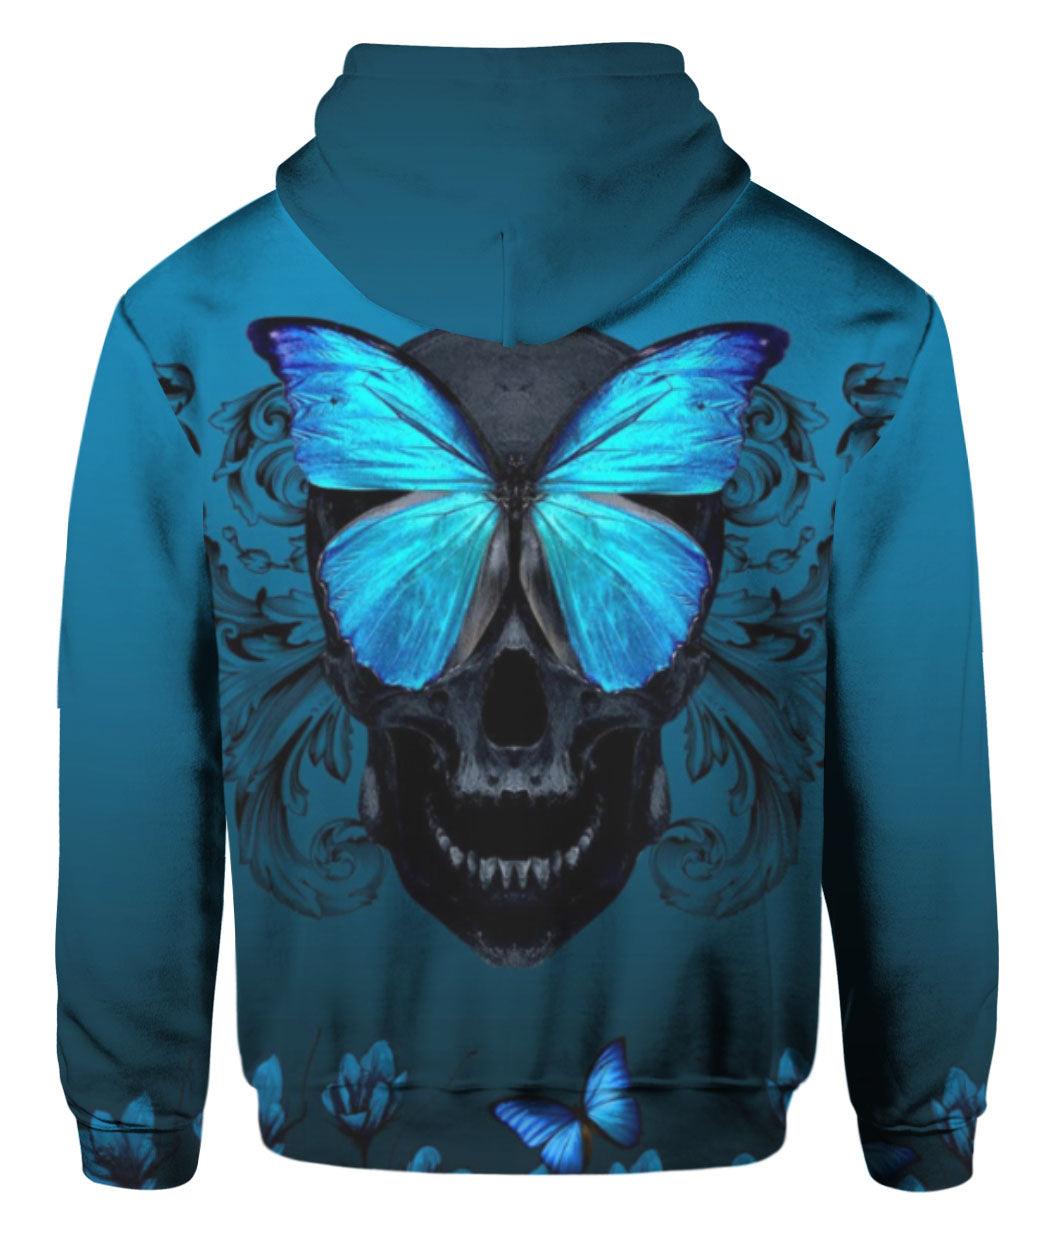 Blue Butterfly Skull Hoodie Full Printed - Wonder Skull